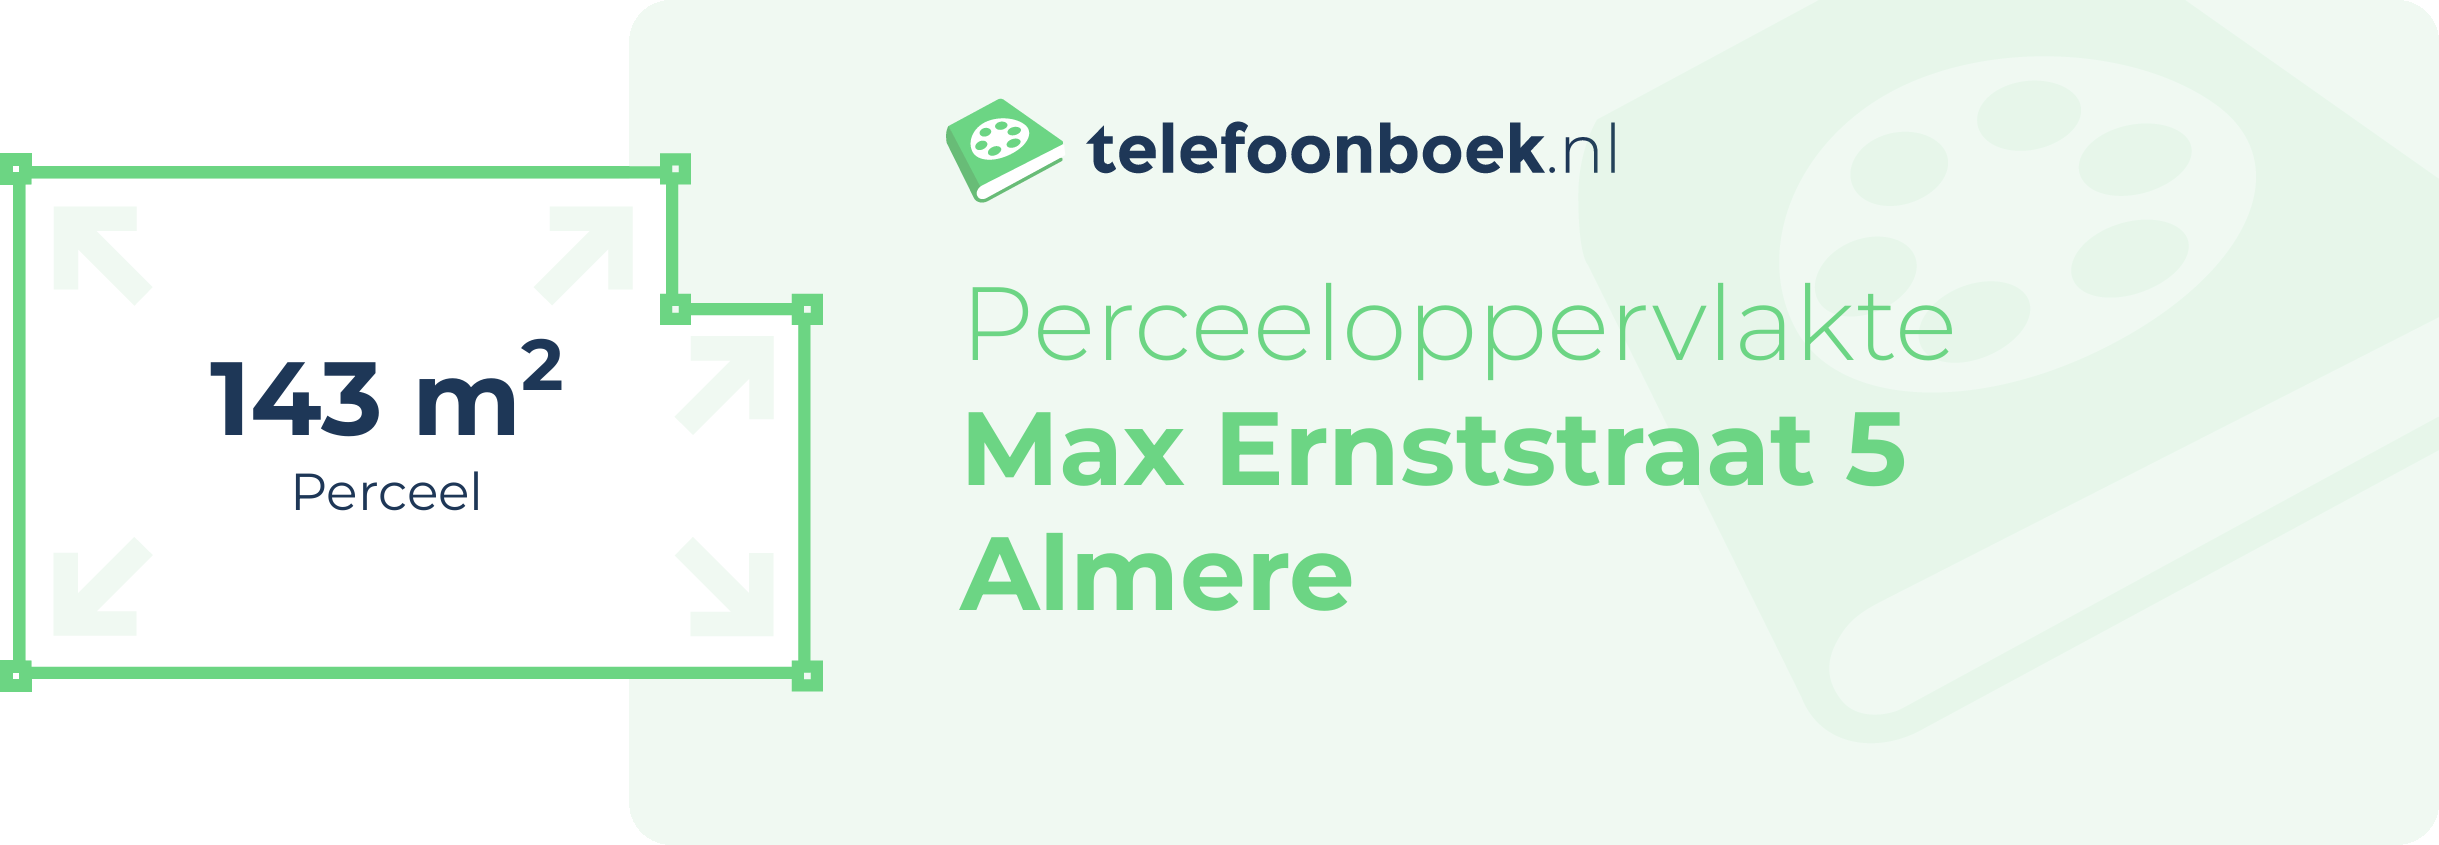 Perceeloppervlakte Max Ernststraat 5 Almere